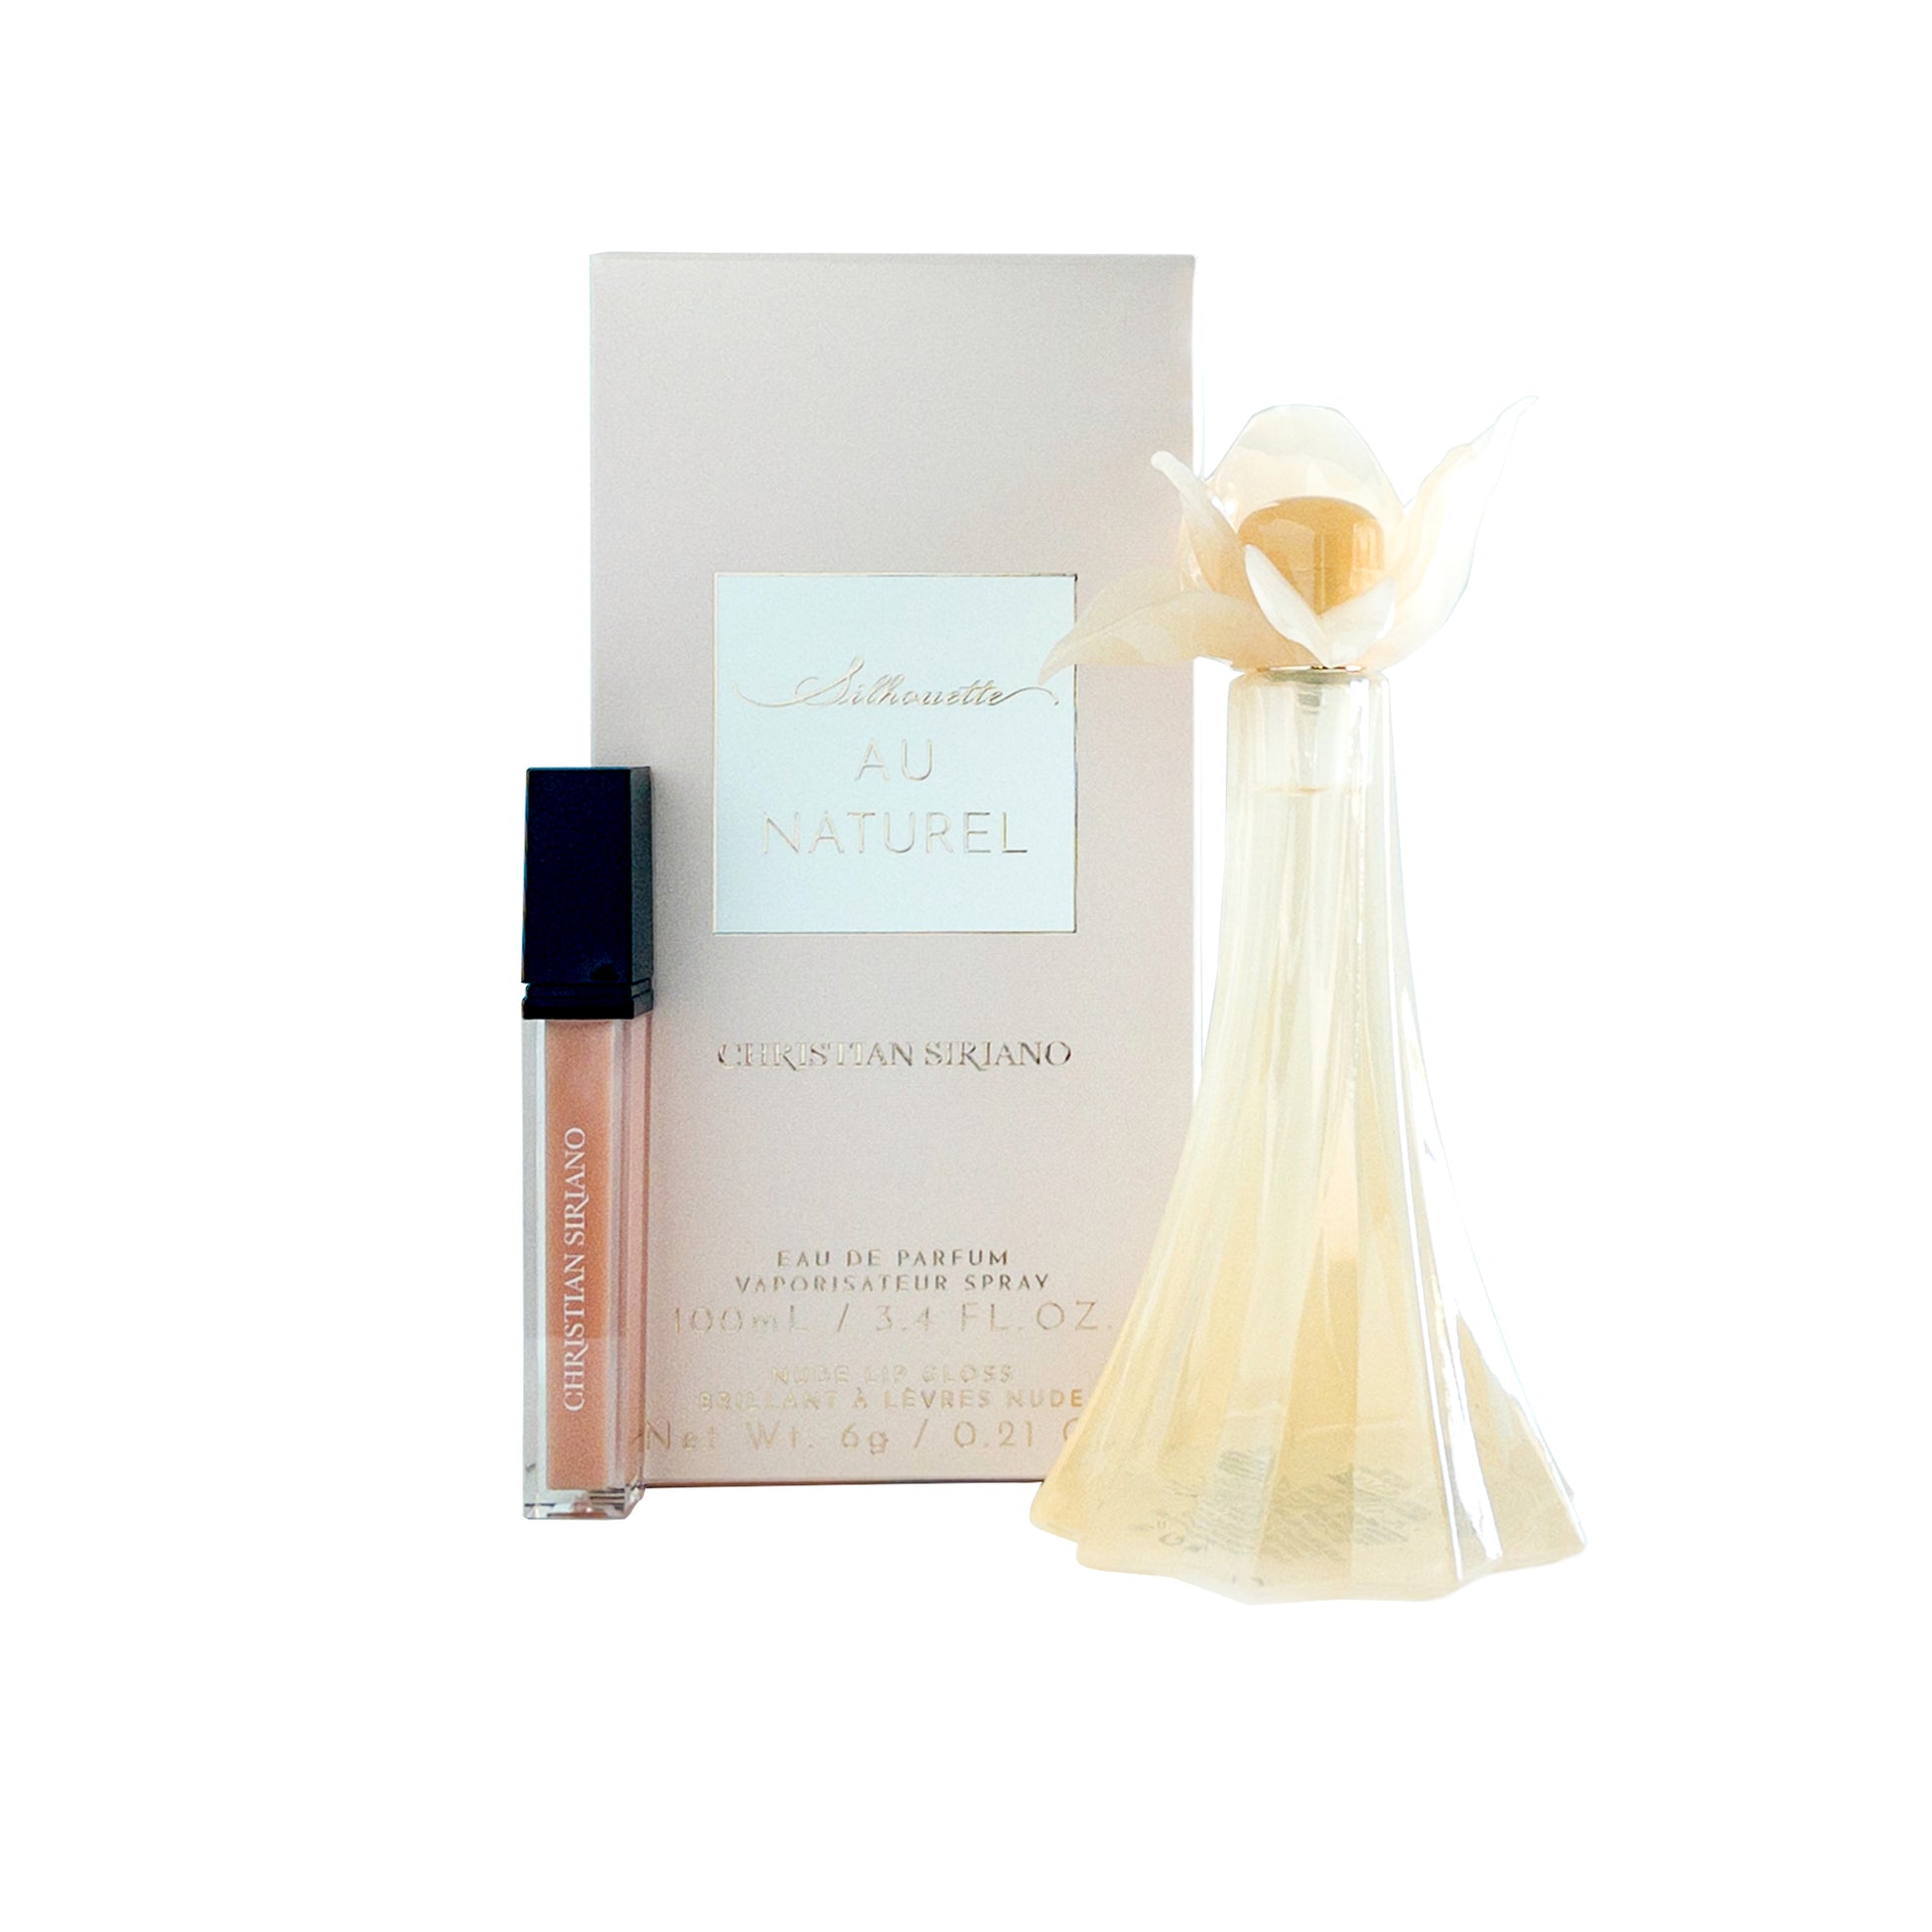 Silhouette Au Natural Eau de Parfum Spray for Women by Christian Siriano 3.4 oz. Click to open in modal